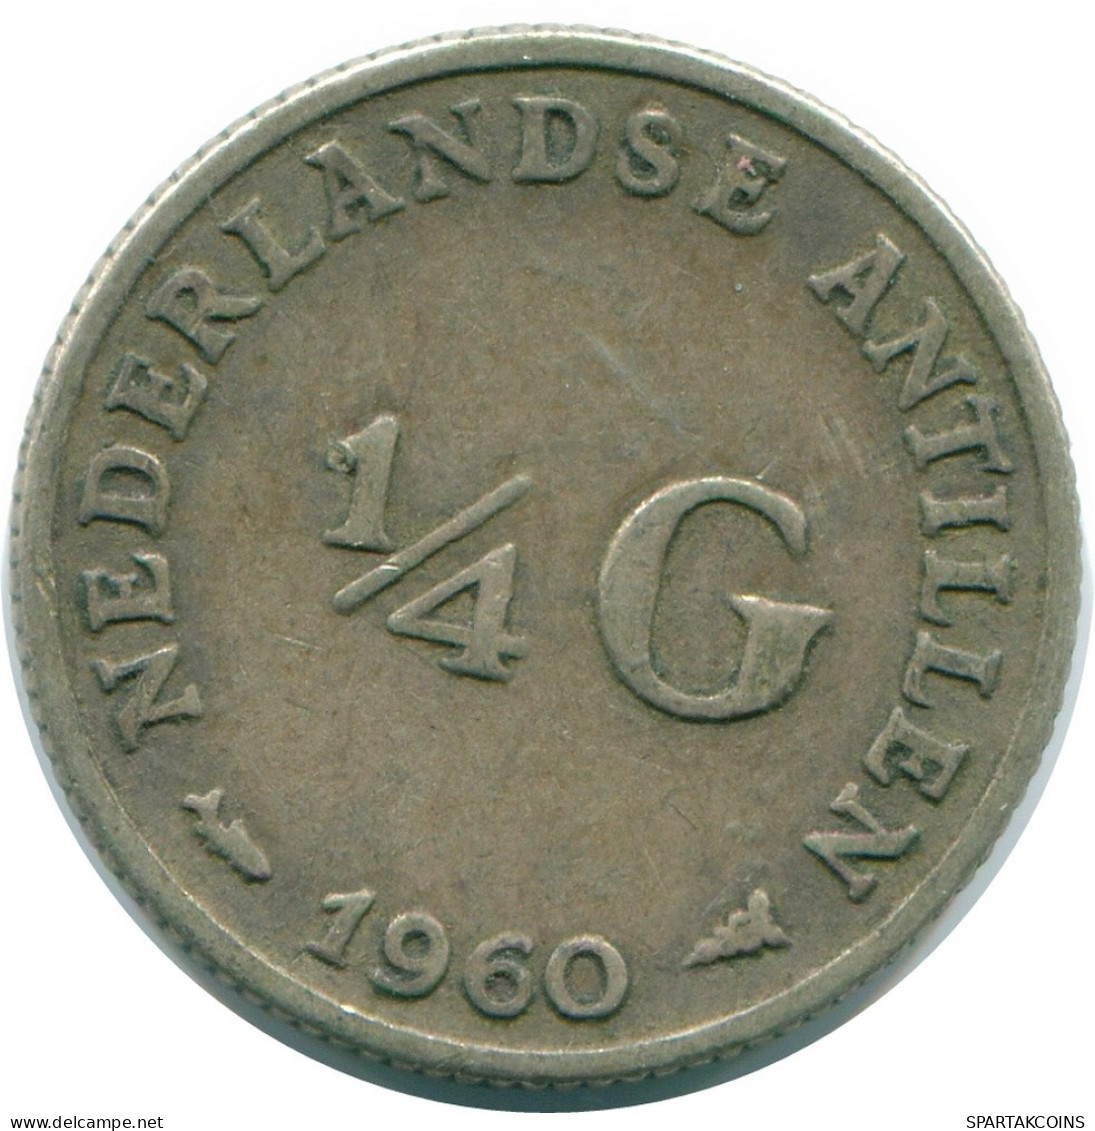 1/4 GULDEN 1960 NIEDERLÄNDISCHE ANTILLEN SILBER Koloniale Münze #NL11092.4.D.A - Netherlands Antilles